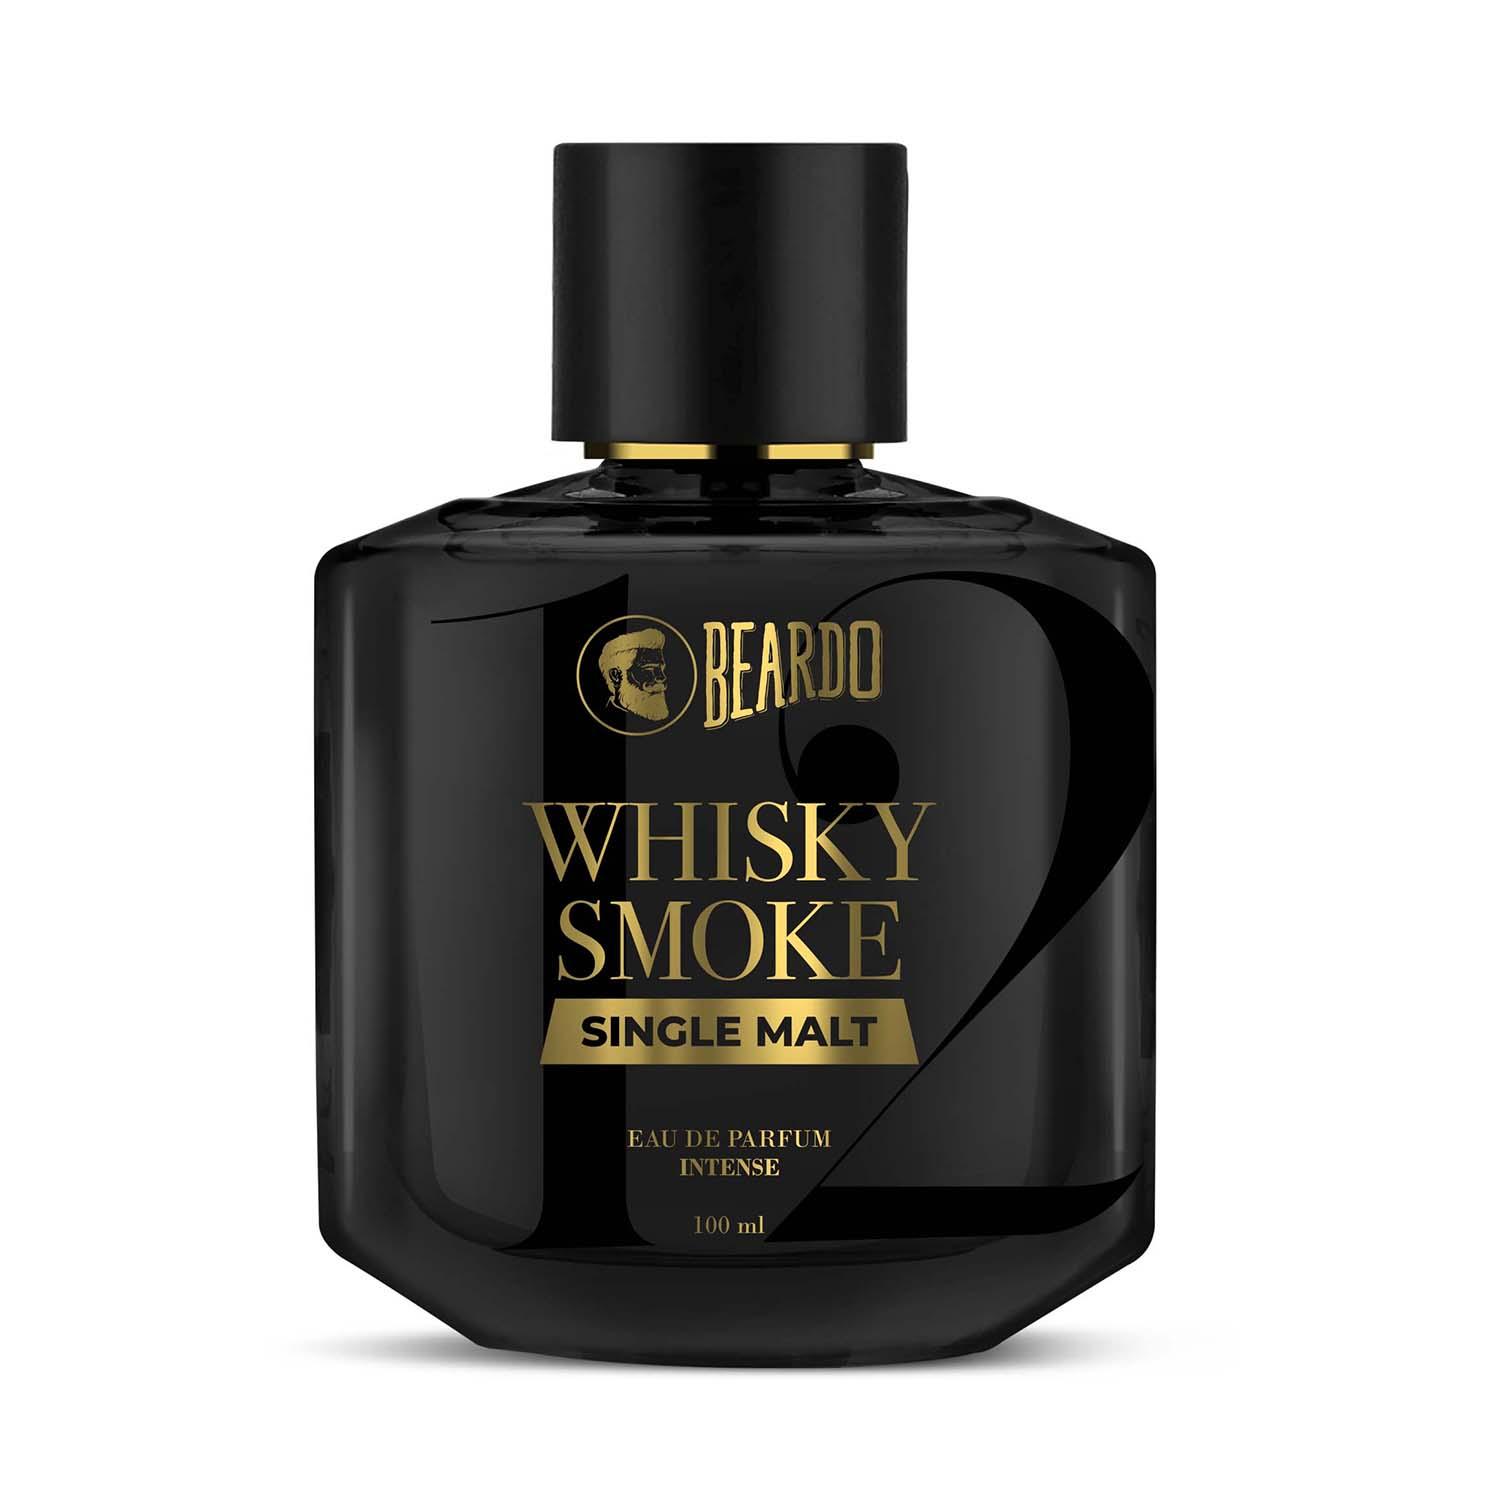 Beardo Whisky Smoke Single Malt EDP Intense (100 ml)